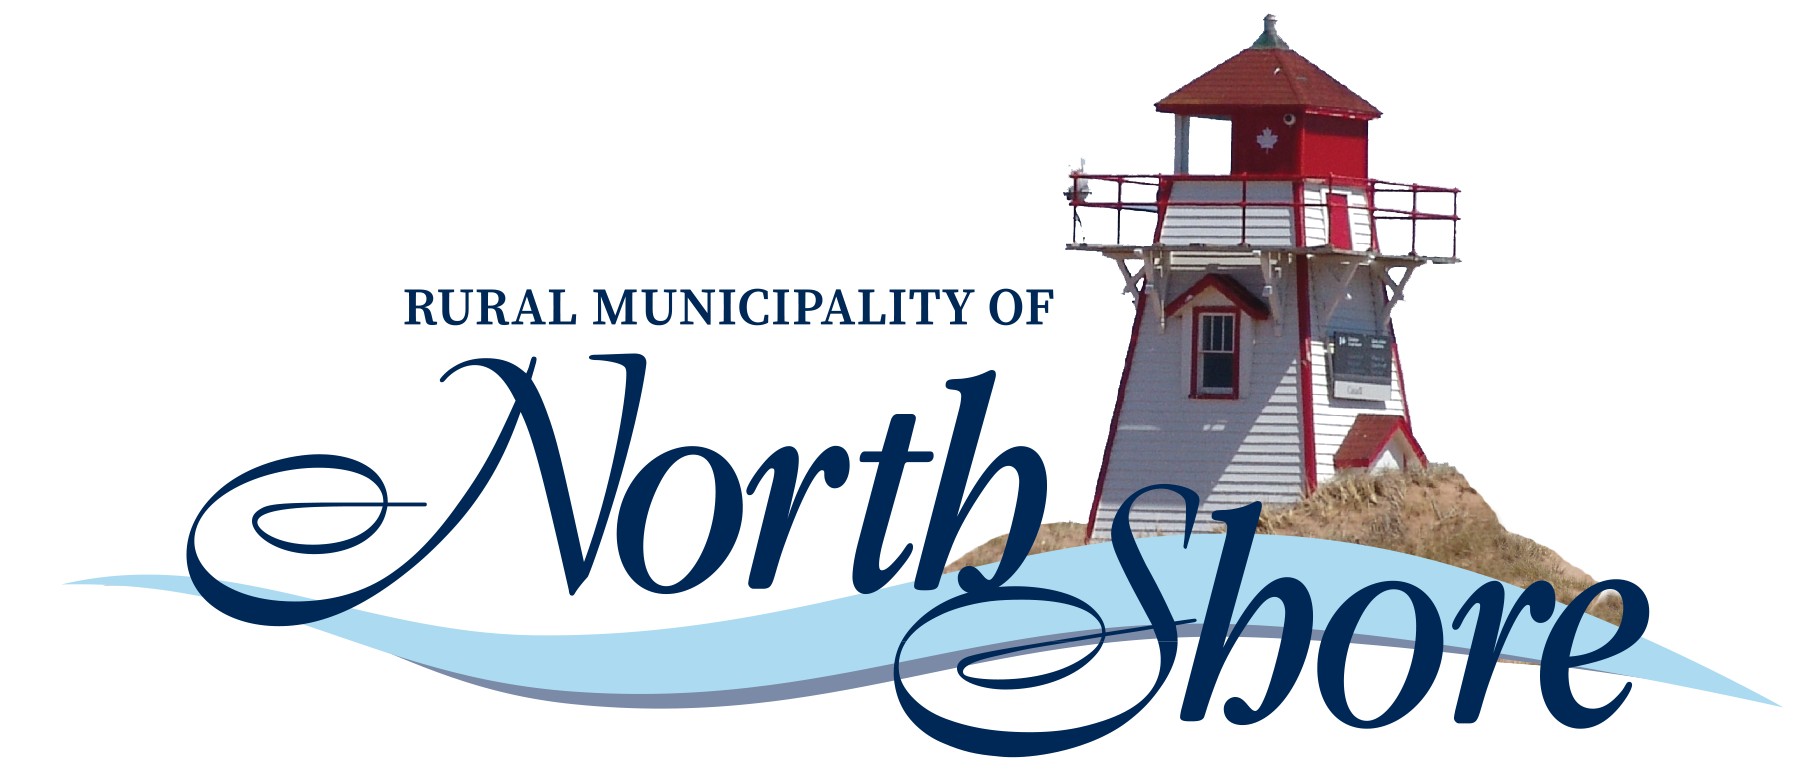 Rural Municipality of North Shore